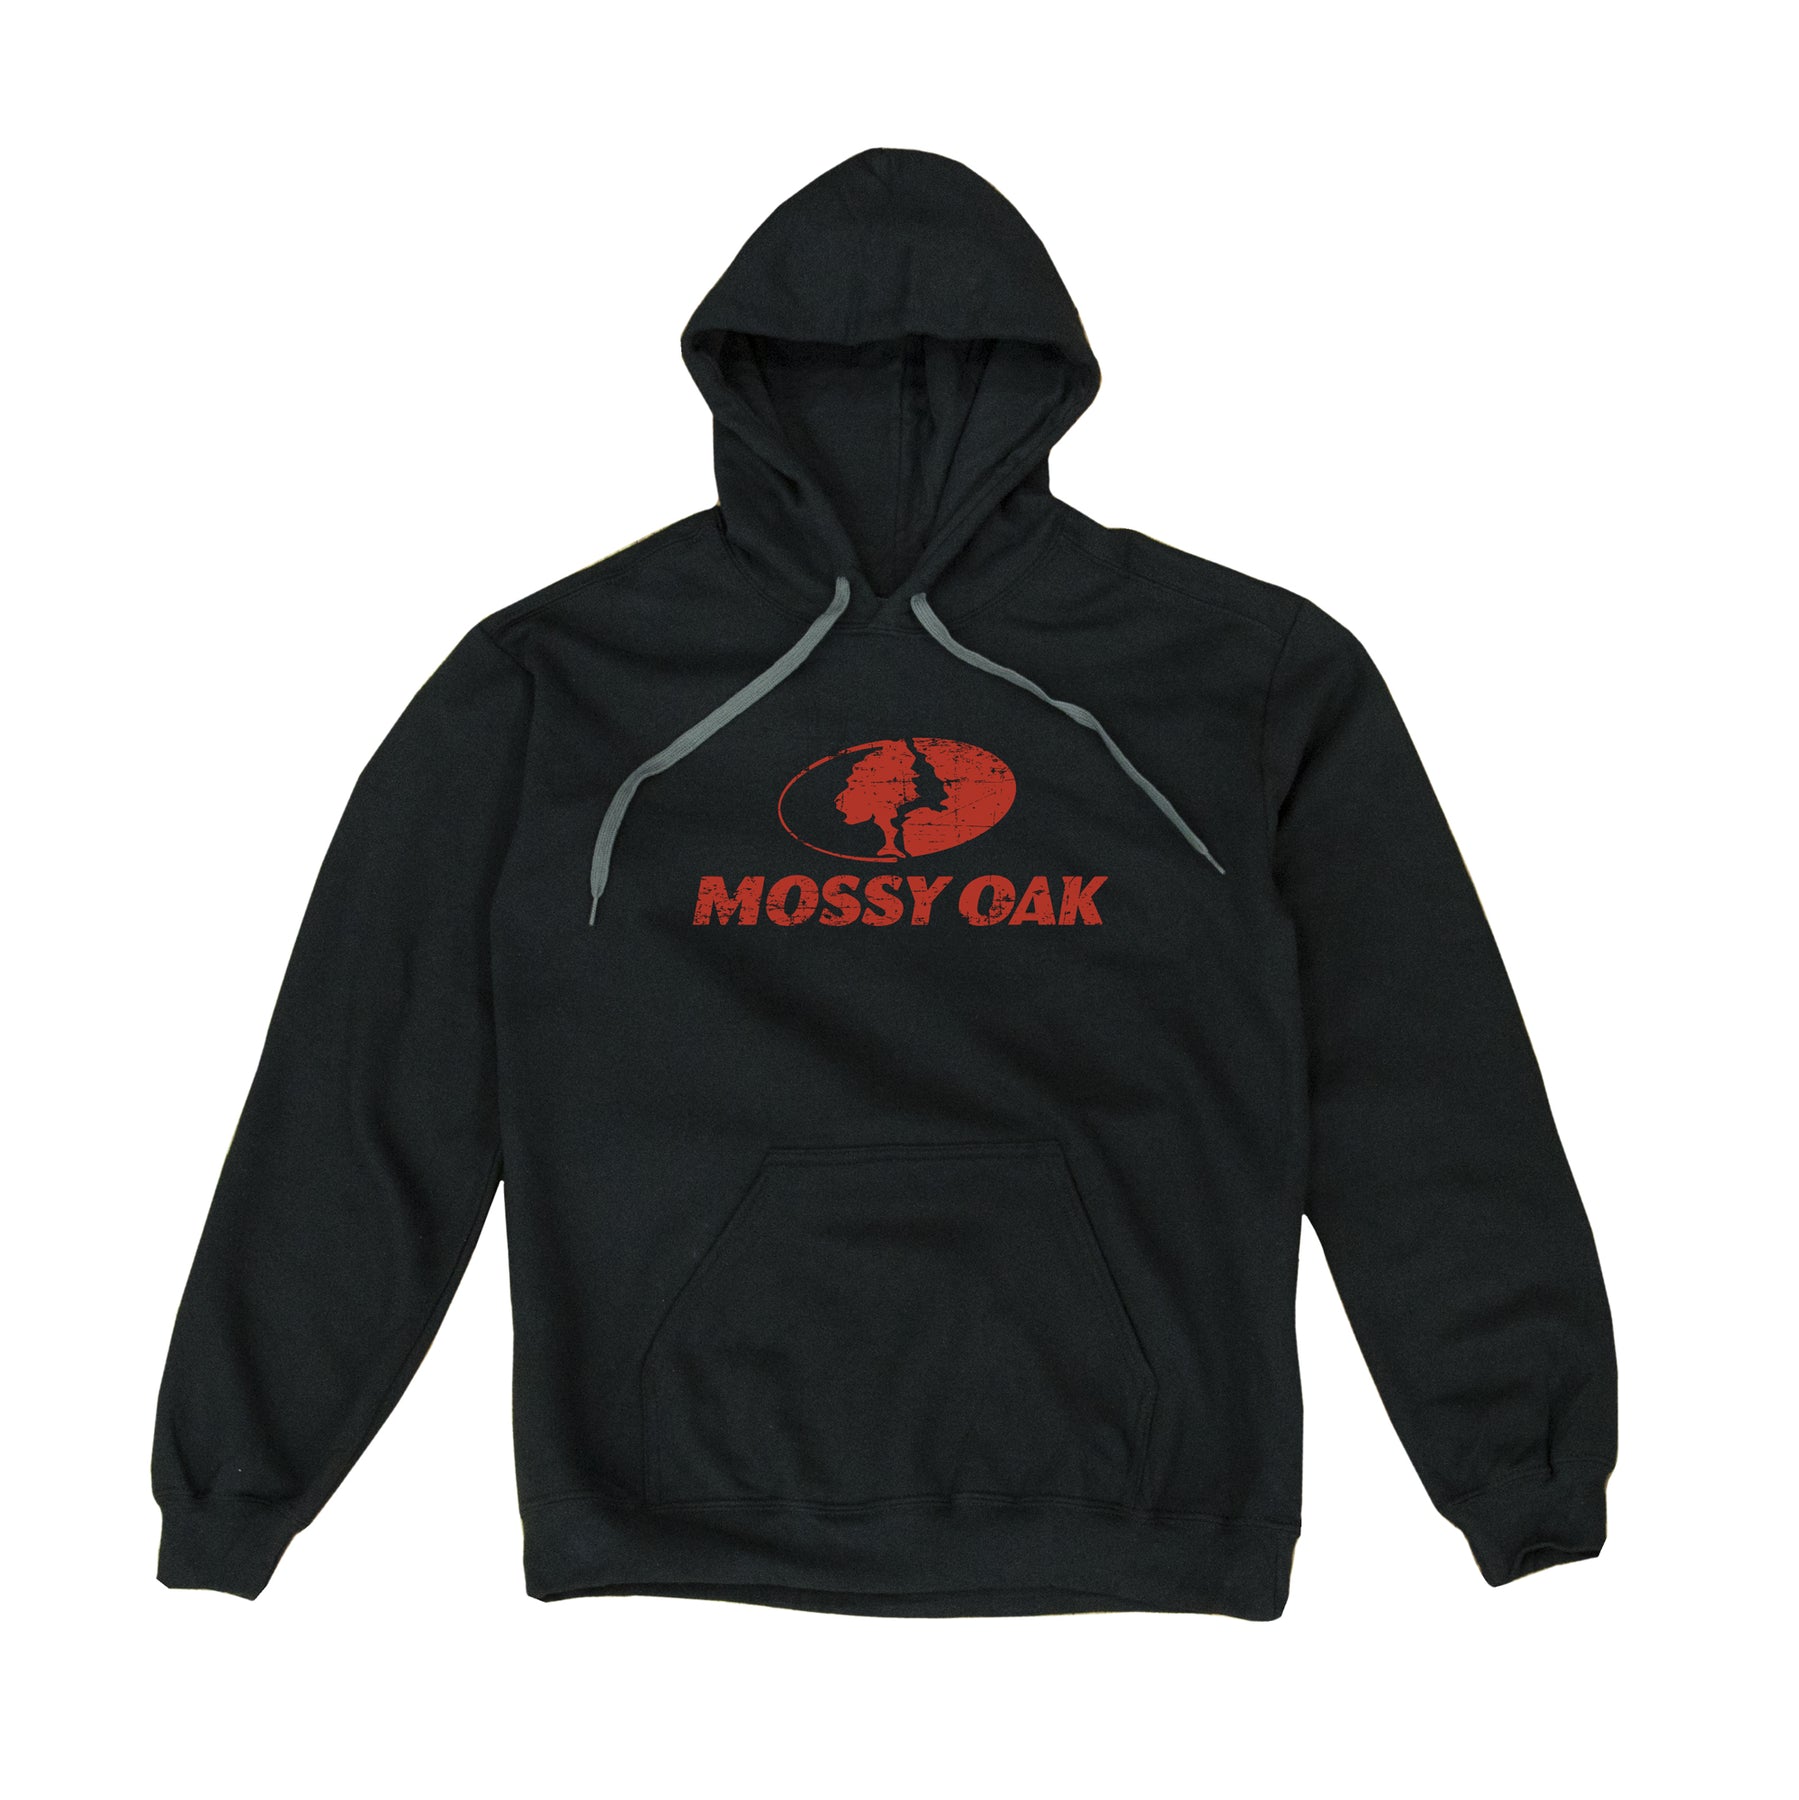 Mossy Oak Brand Hoodie